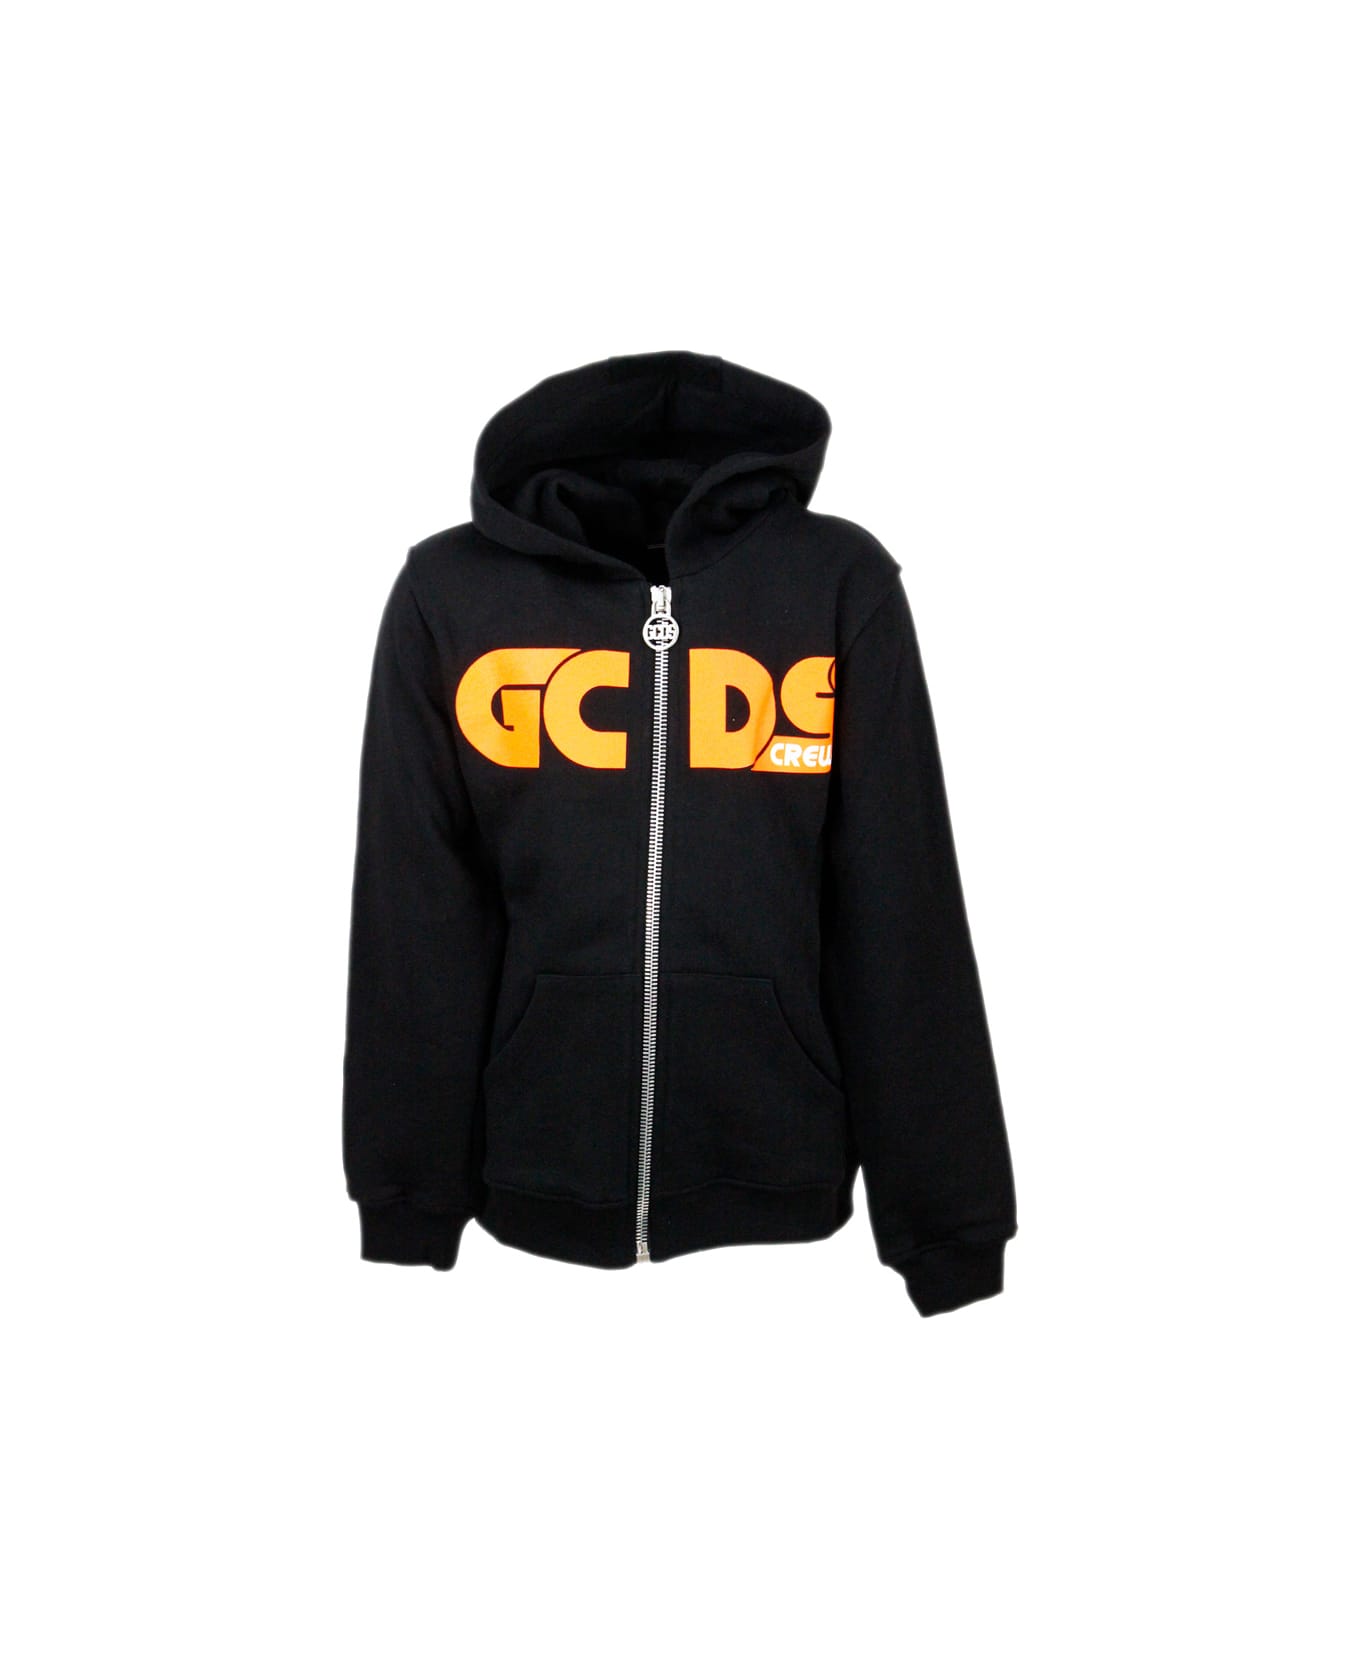 GCDS Hooded Sweatshirt With Zip And Fluo Writing - Black